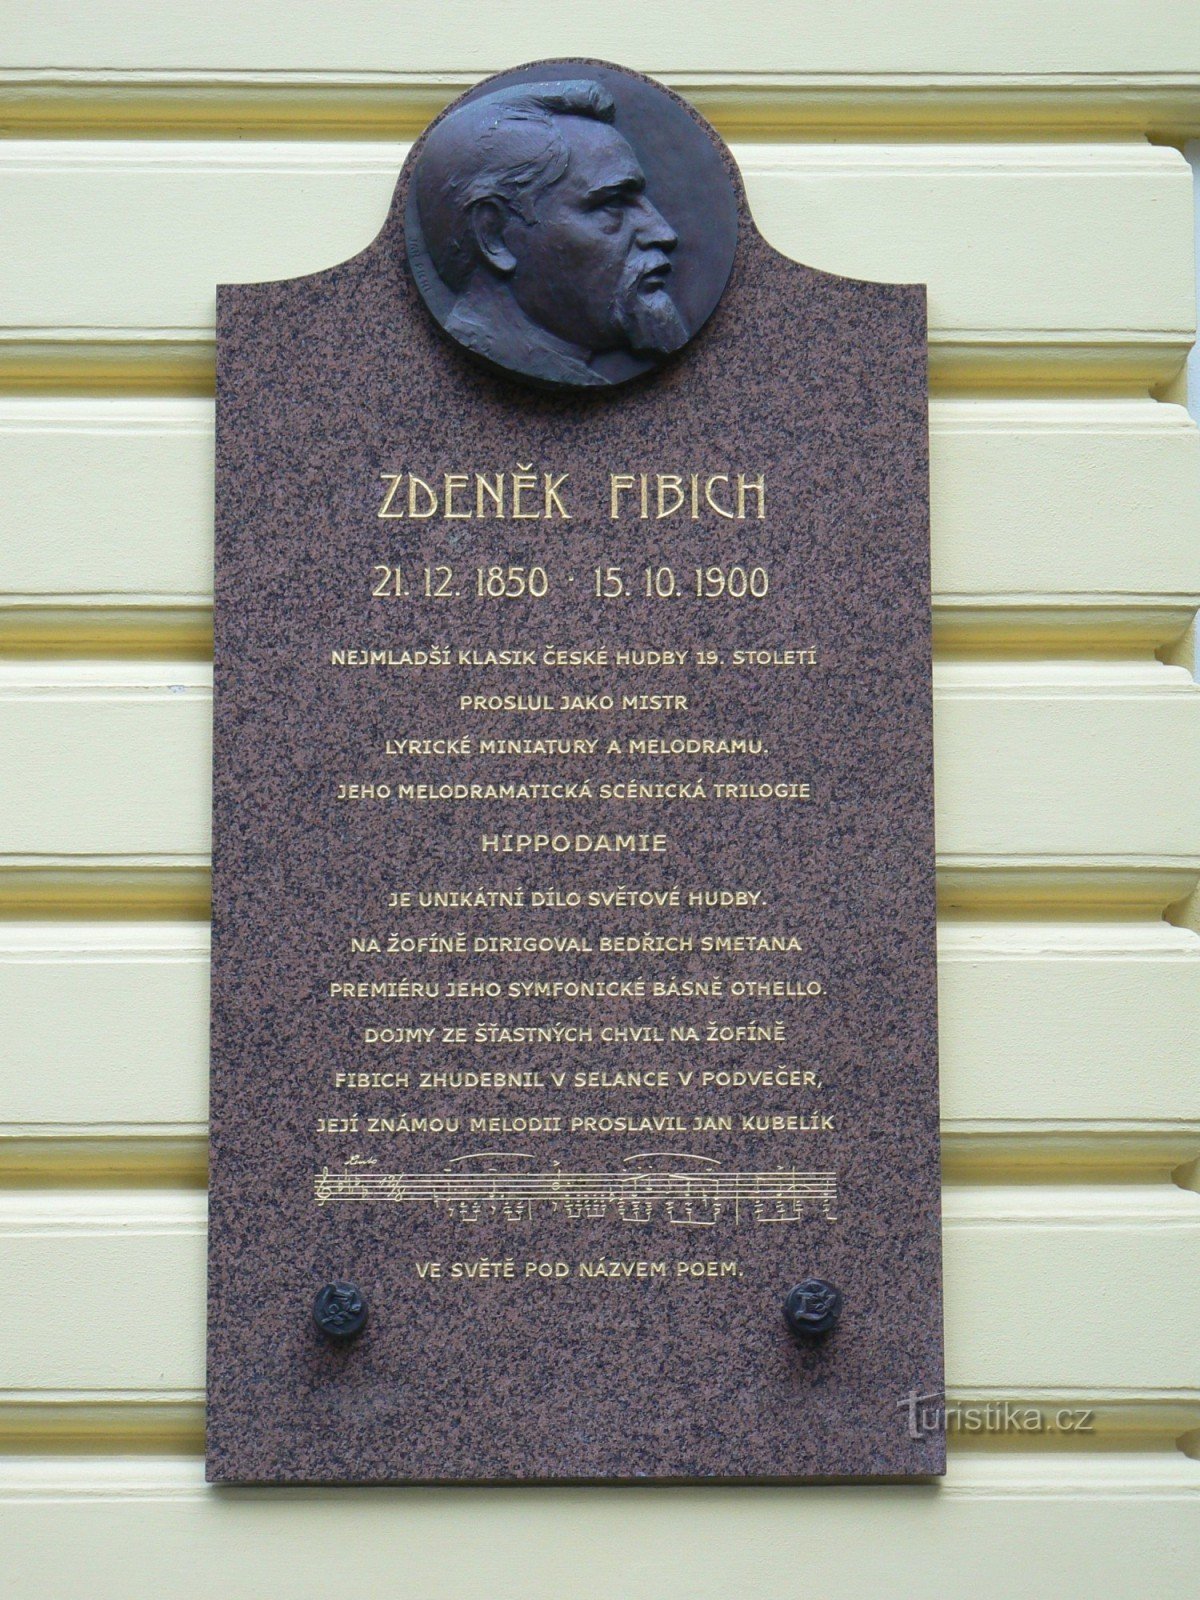 Spominska plošča Zdeněka Fibicha